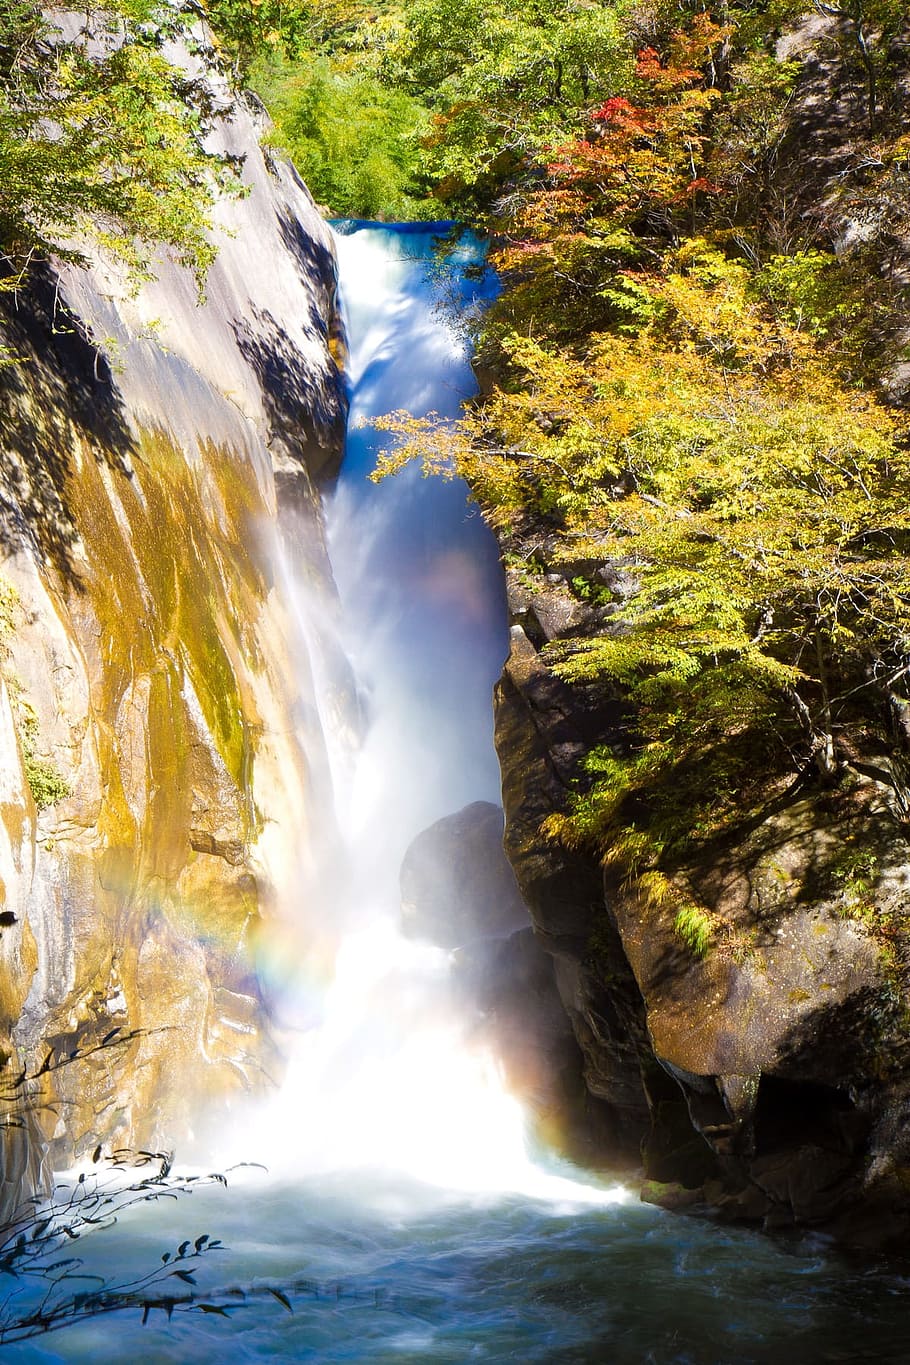 Japan, Forest, Trees, Woods, Autumn, fall, foliage, waterfall, waterfalls, cascade